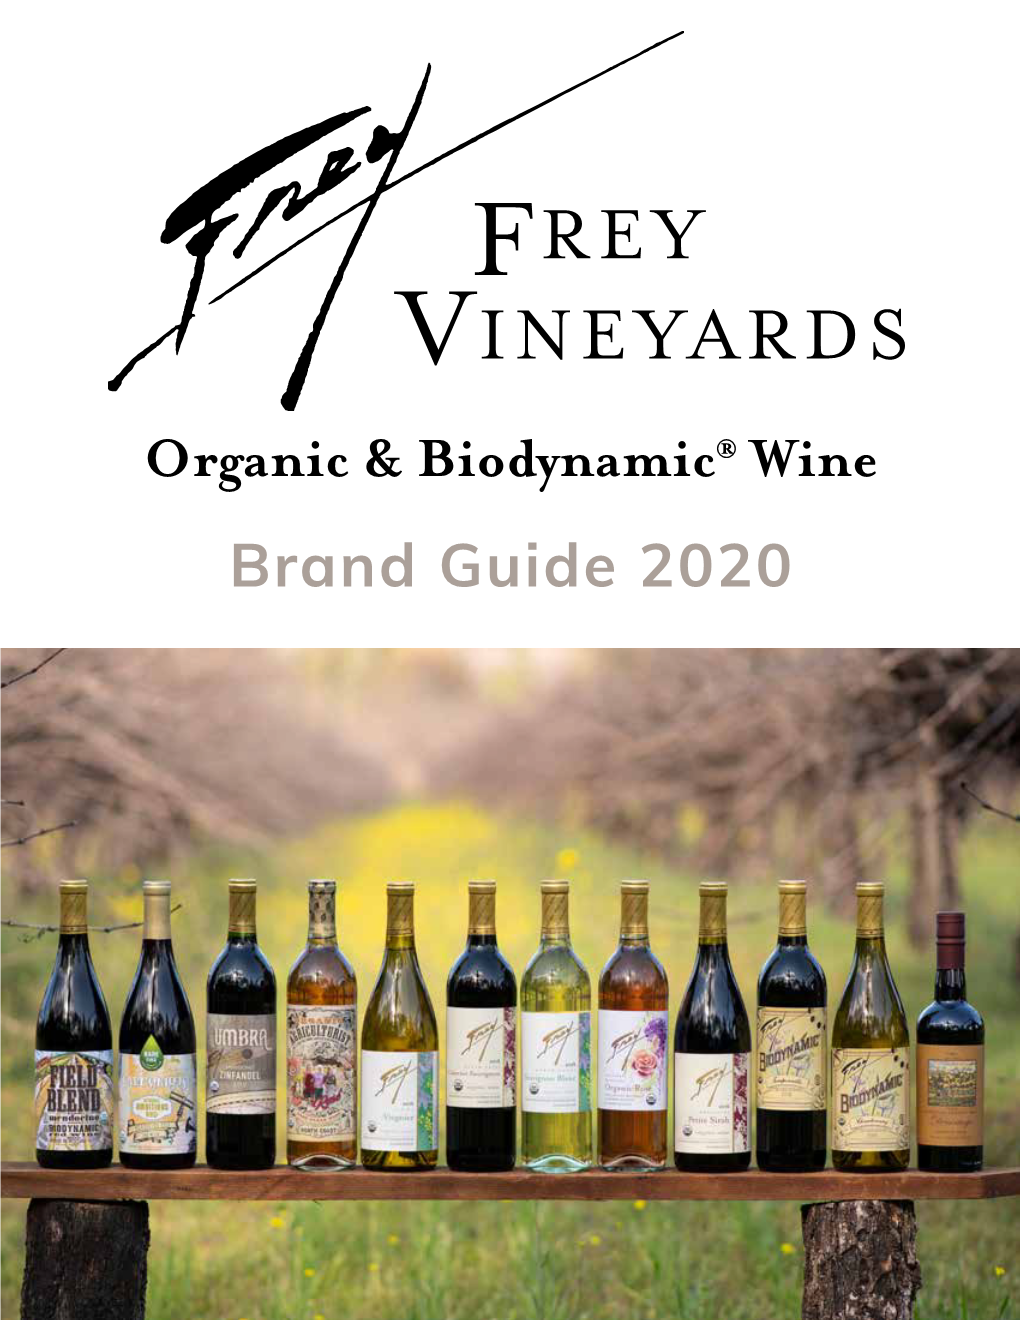 FREY VINEYARDS Organic & Biodynamic® Wine Brand Guide 2020